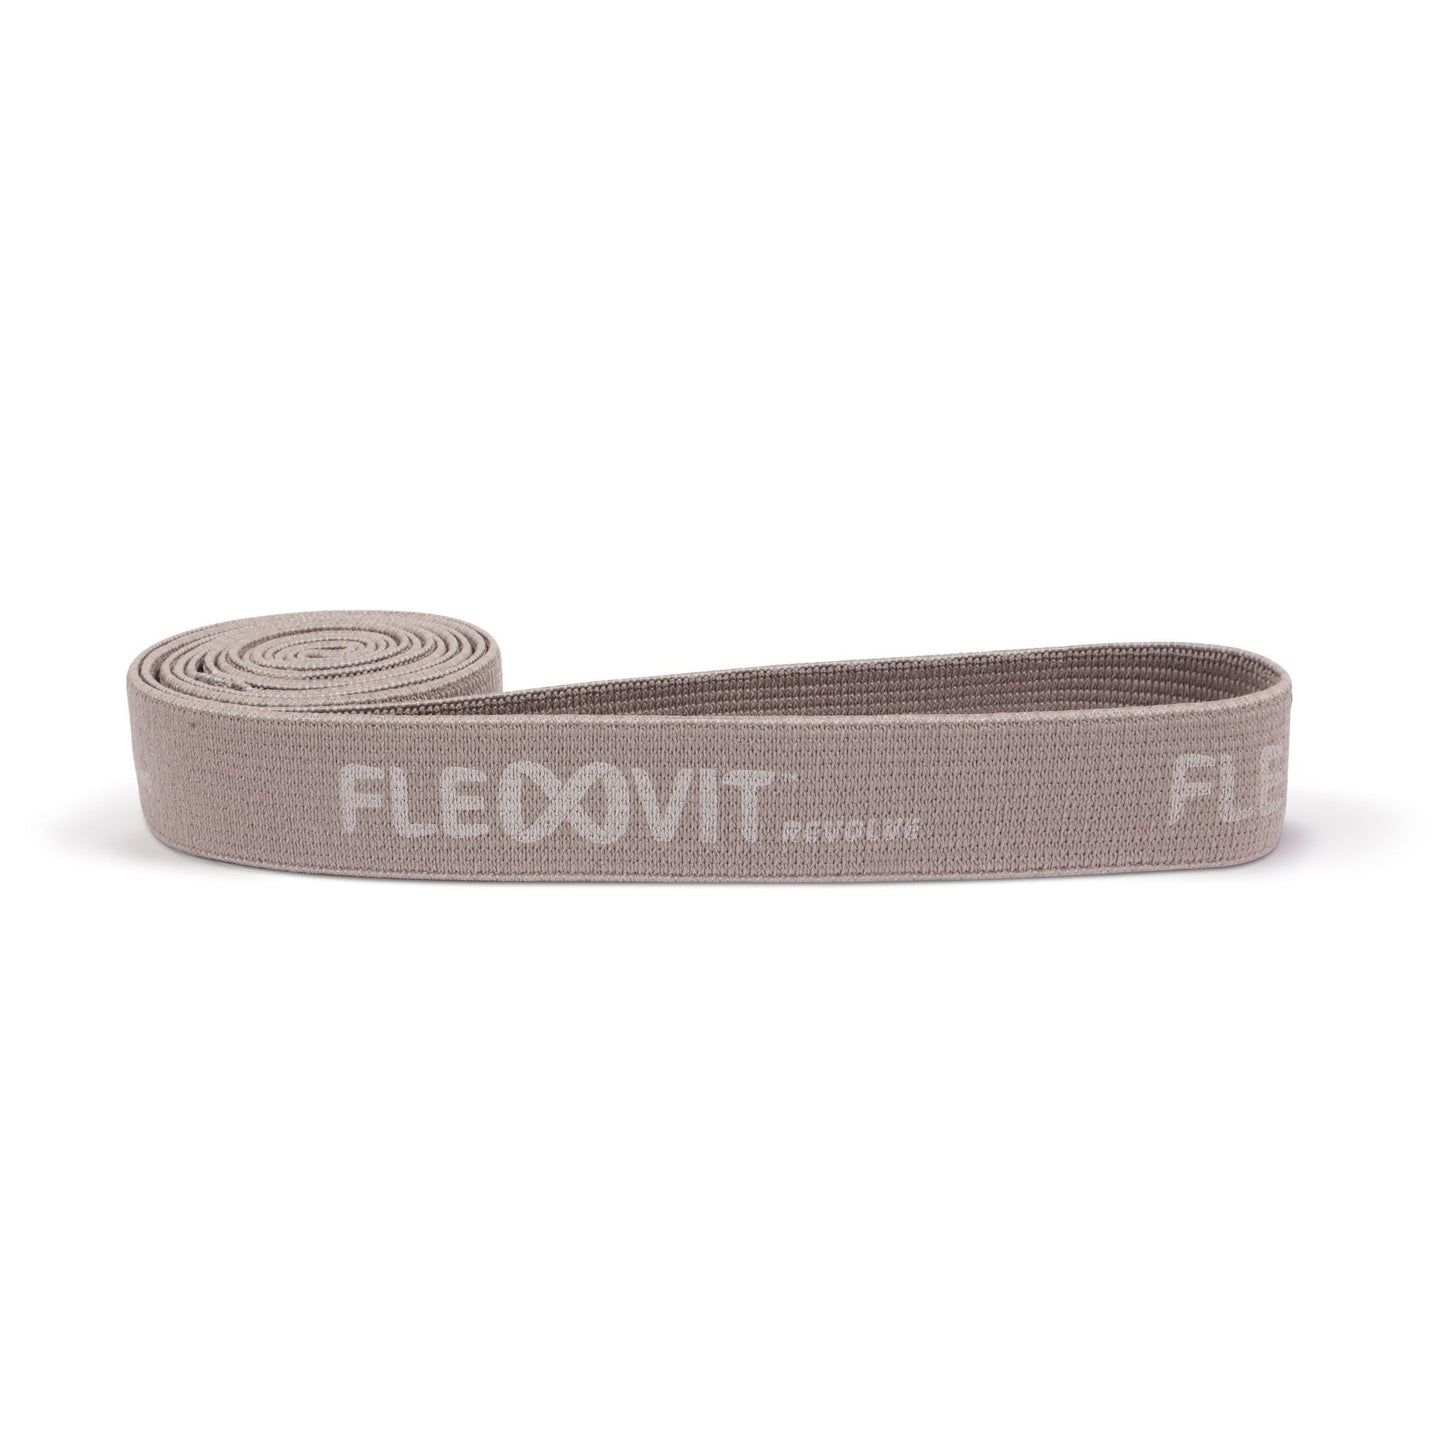 FLEXVIT Revolve Bands - PEAK LABS